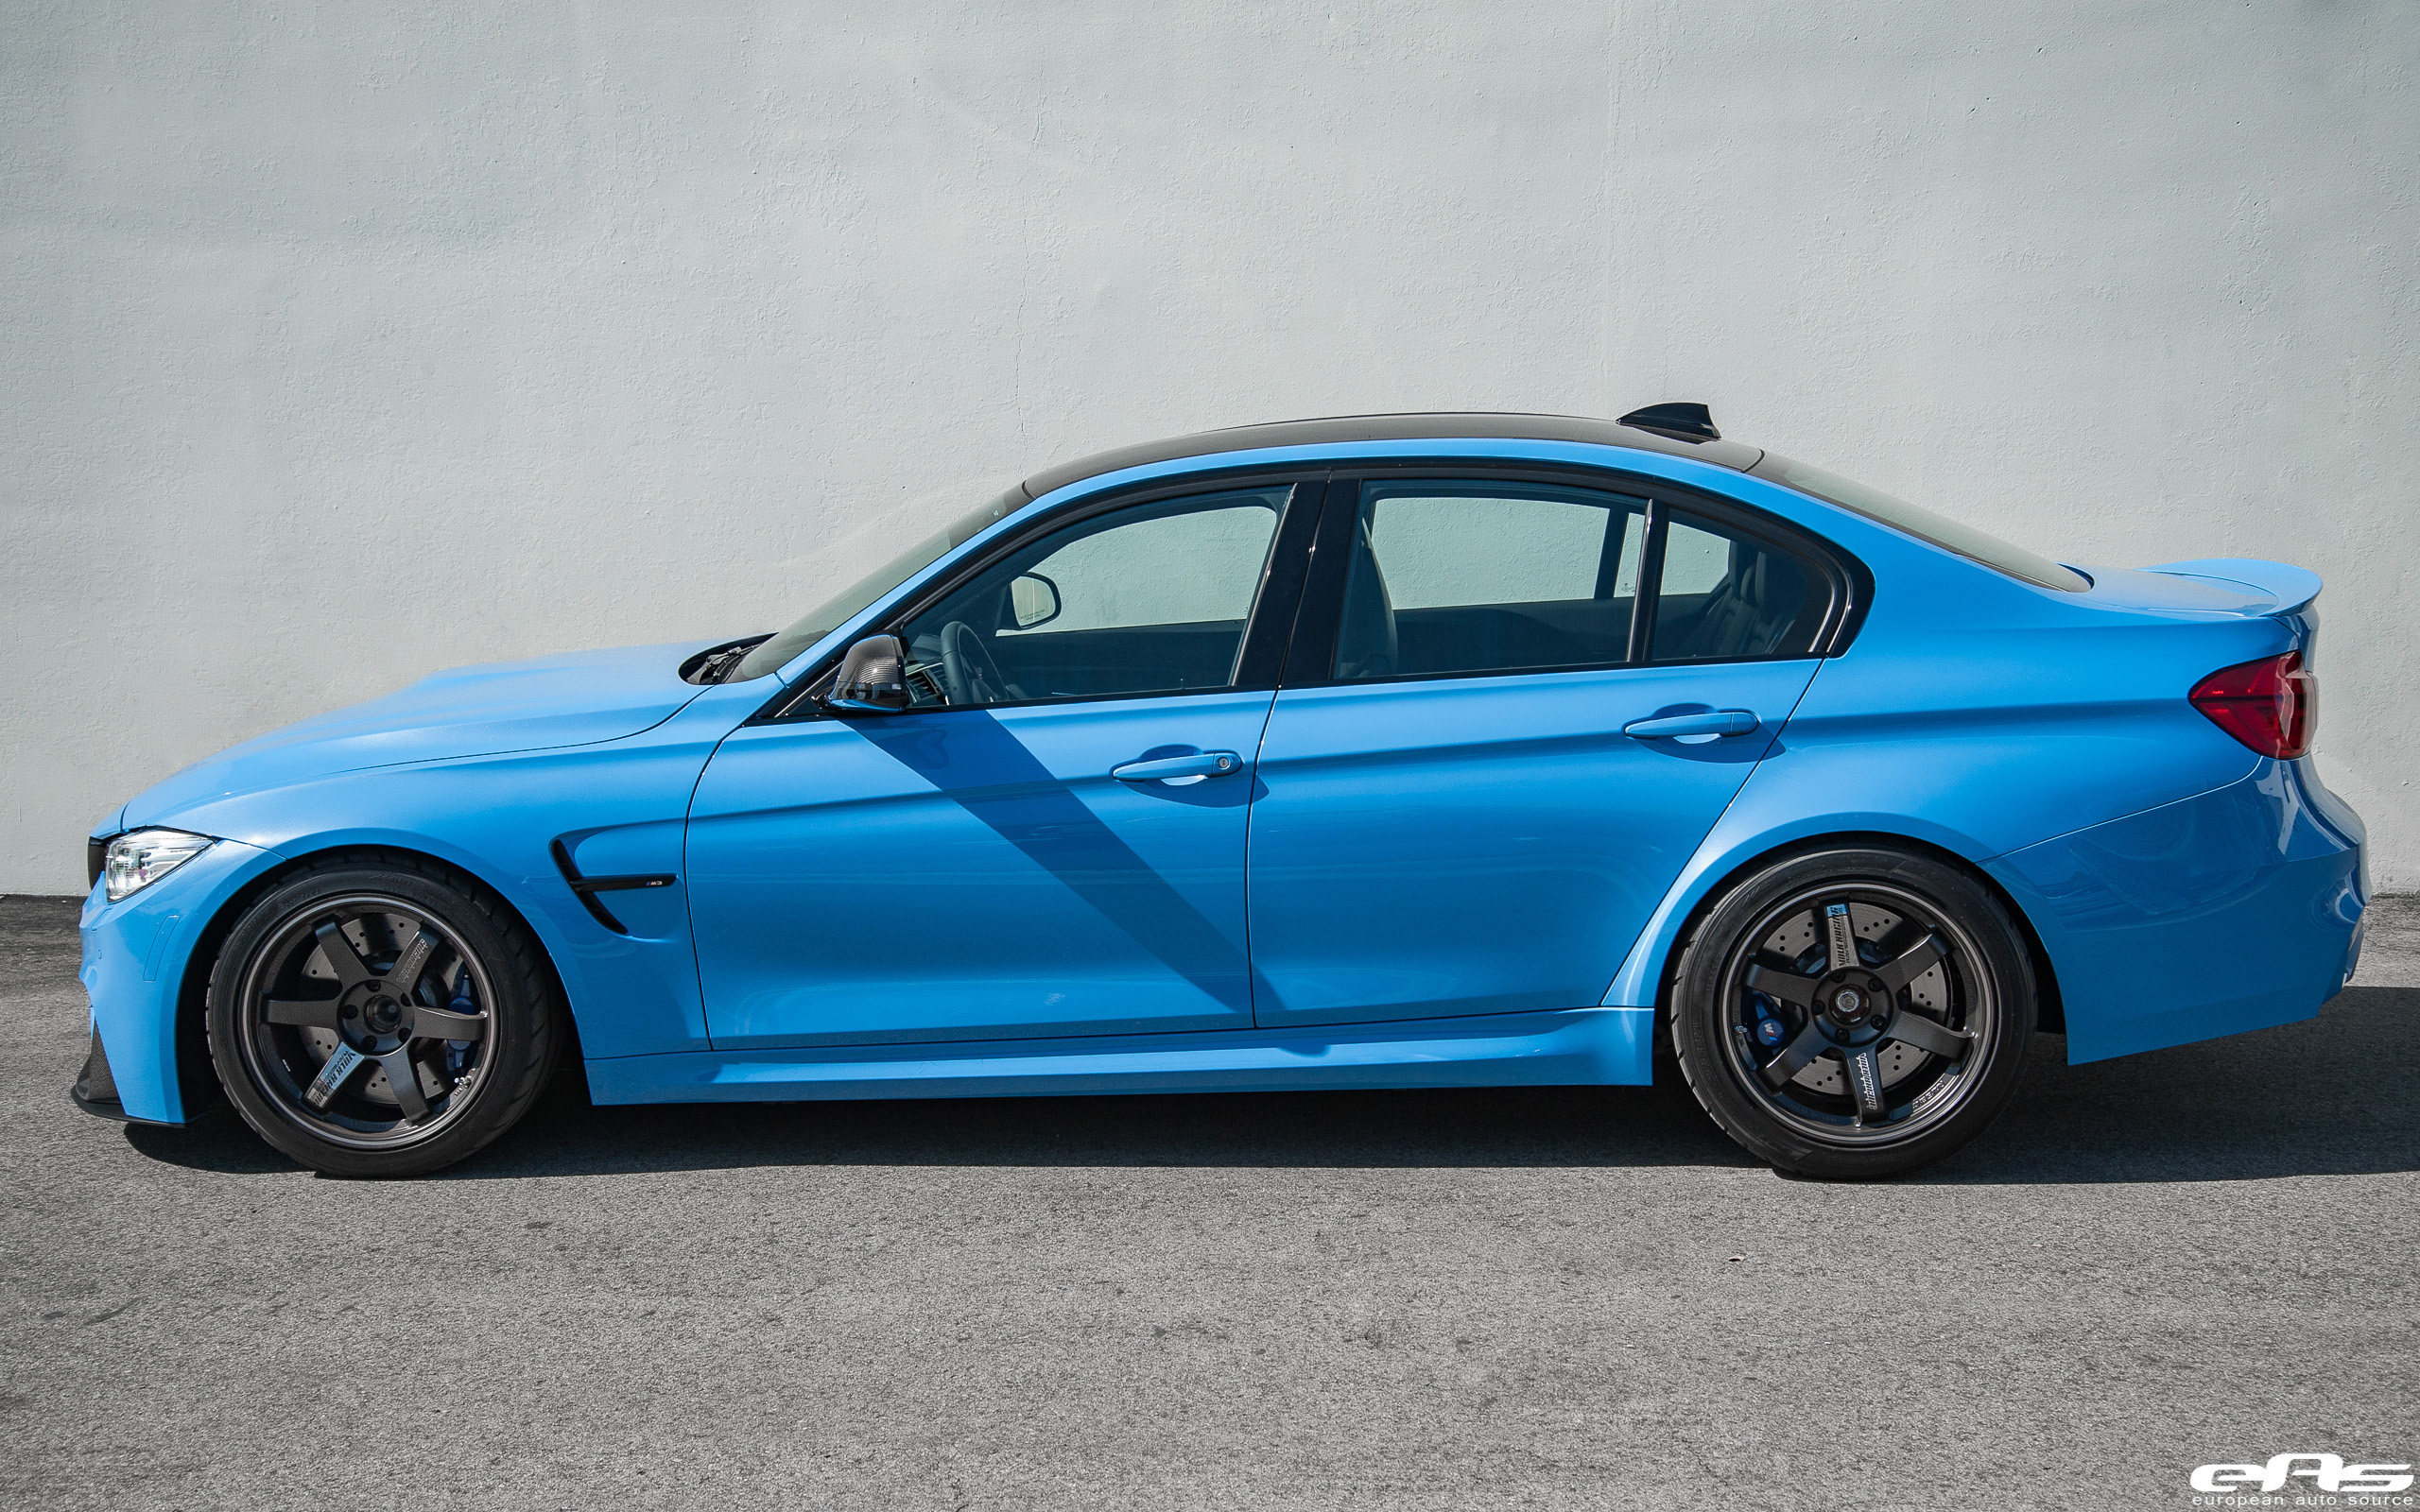 Who Did It Better: BMW's Yas Marina Blue or Lamborghini's Blu Cepheus